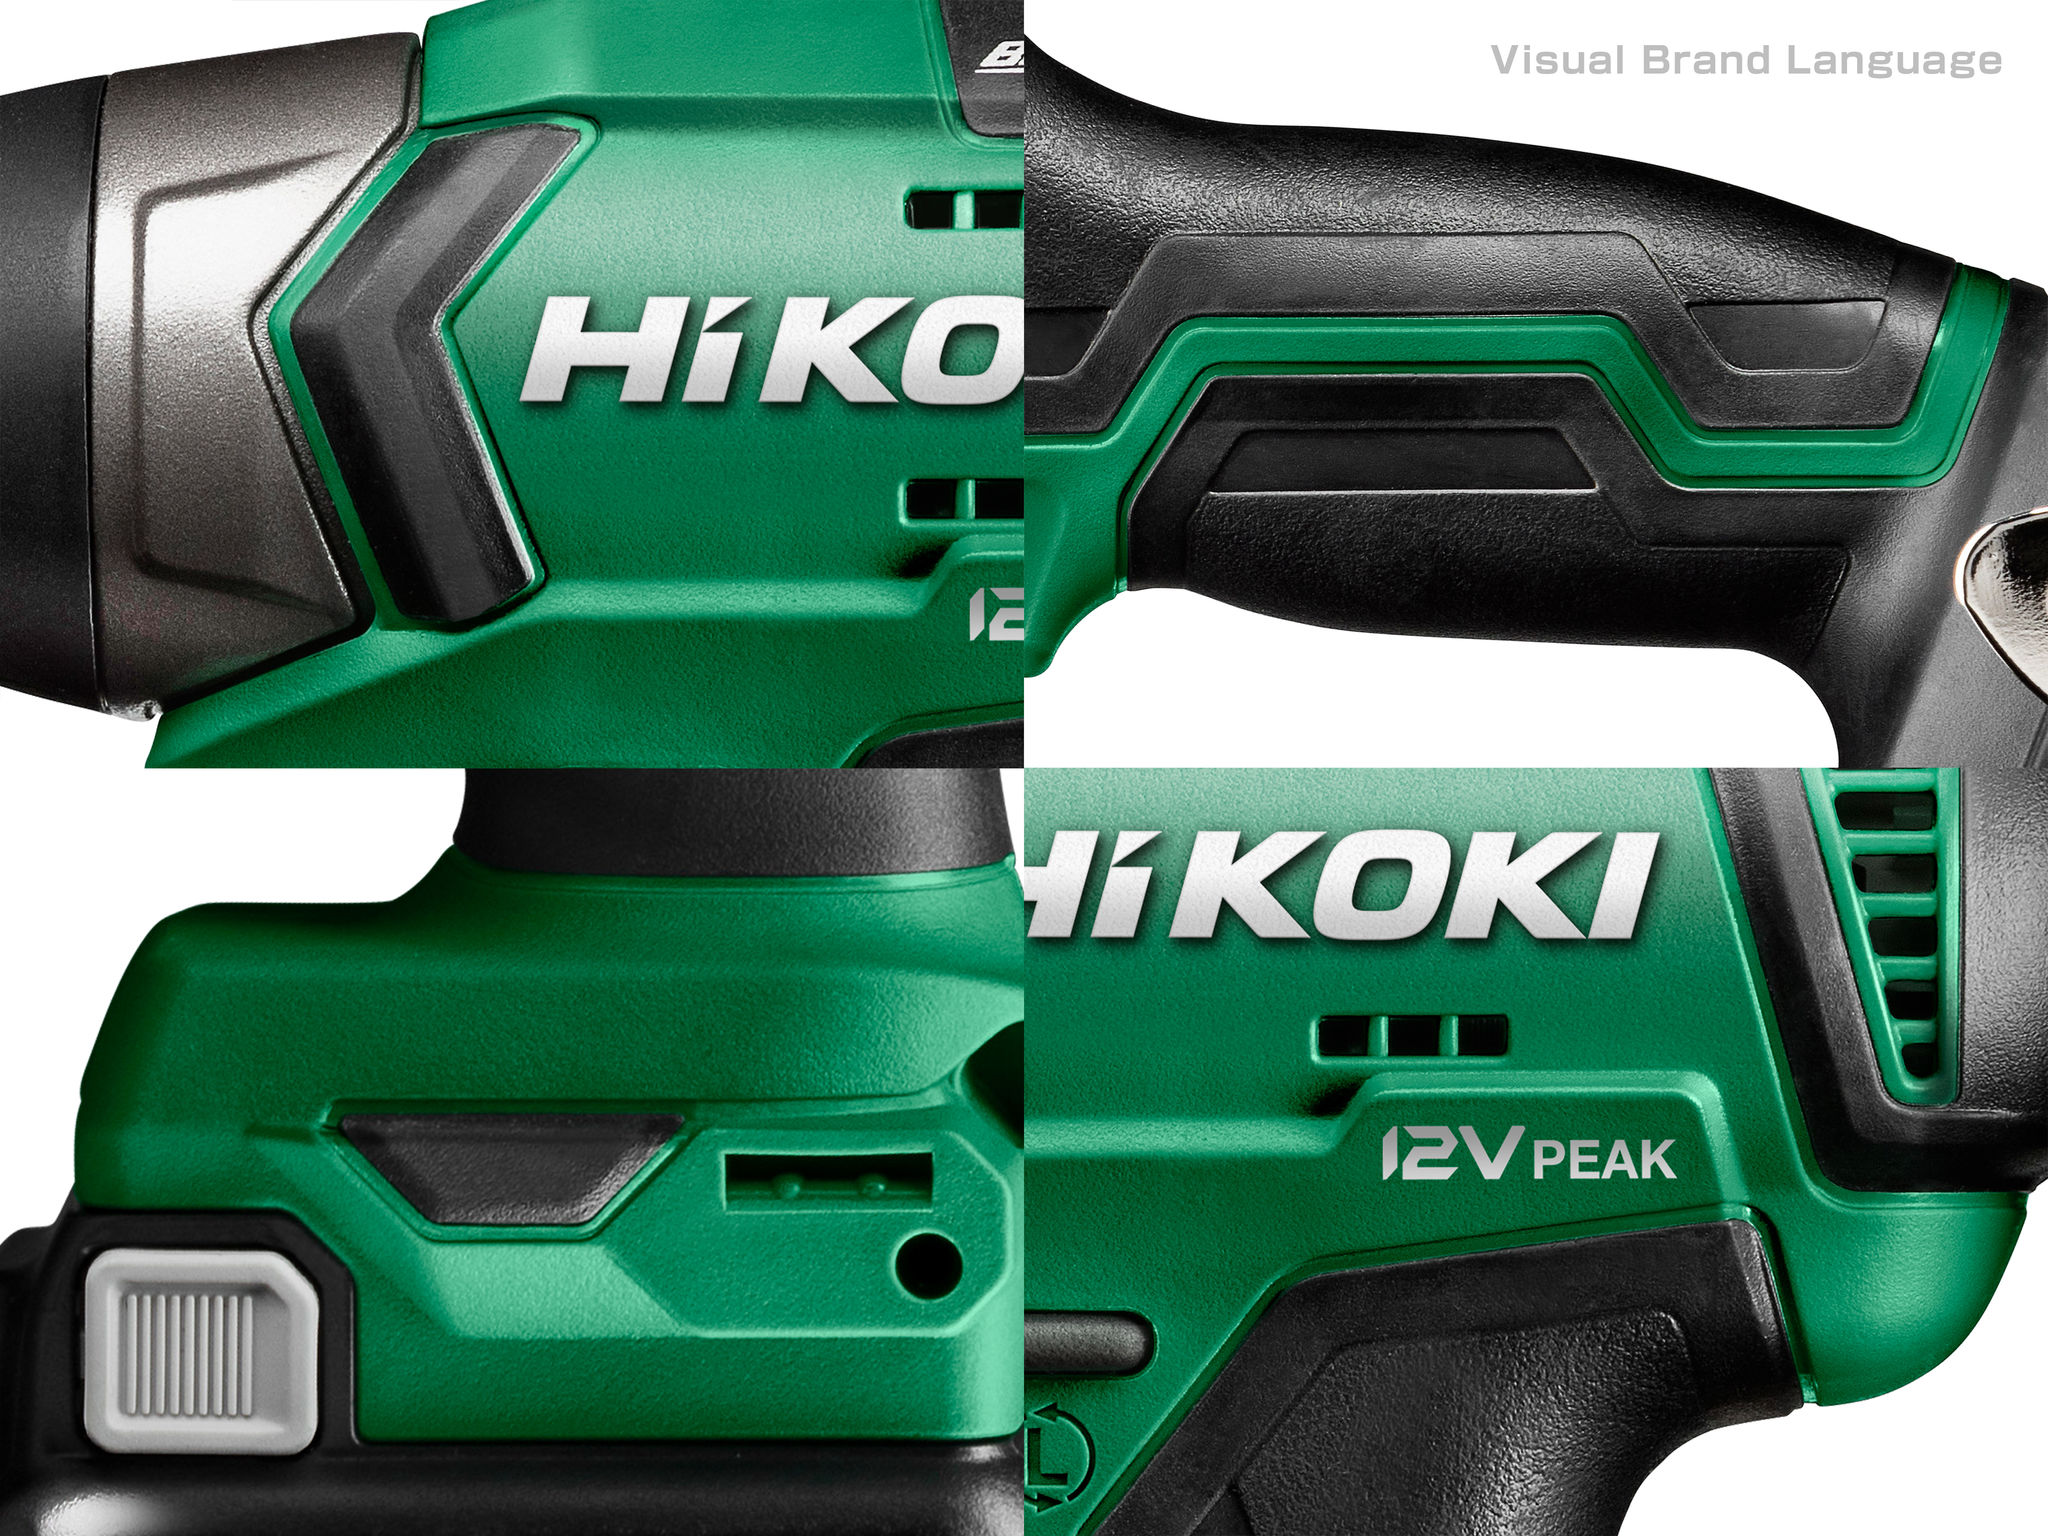 Hikoki 12V Peak Series